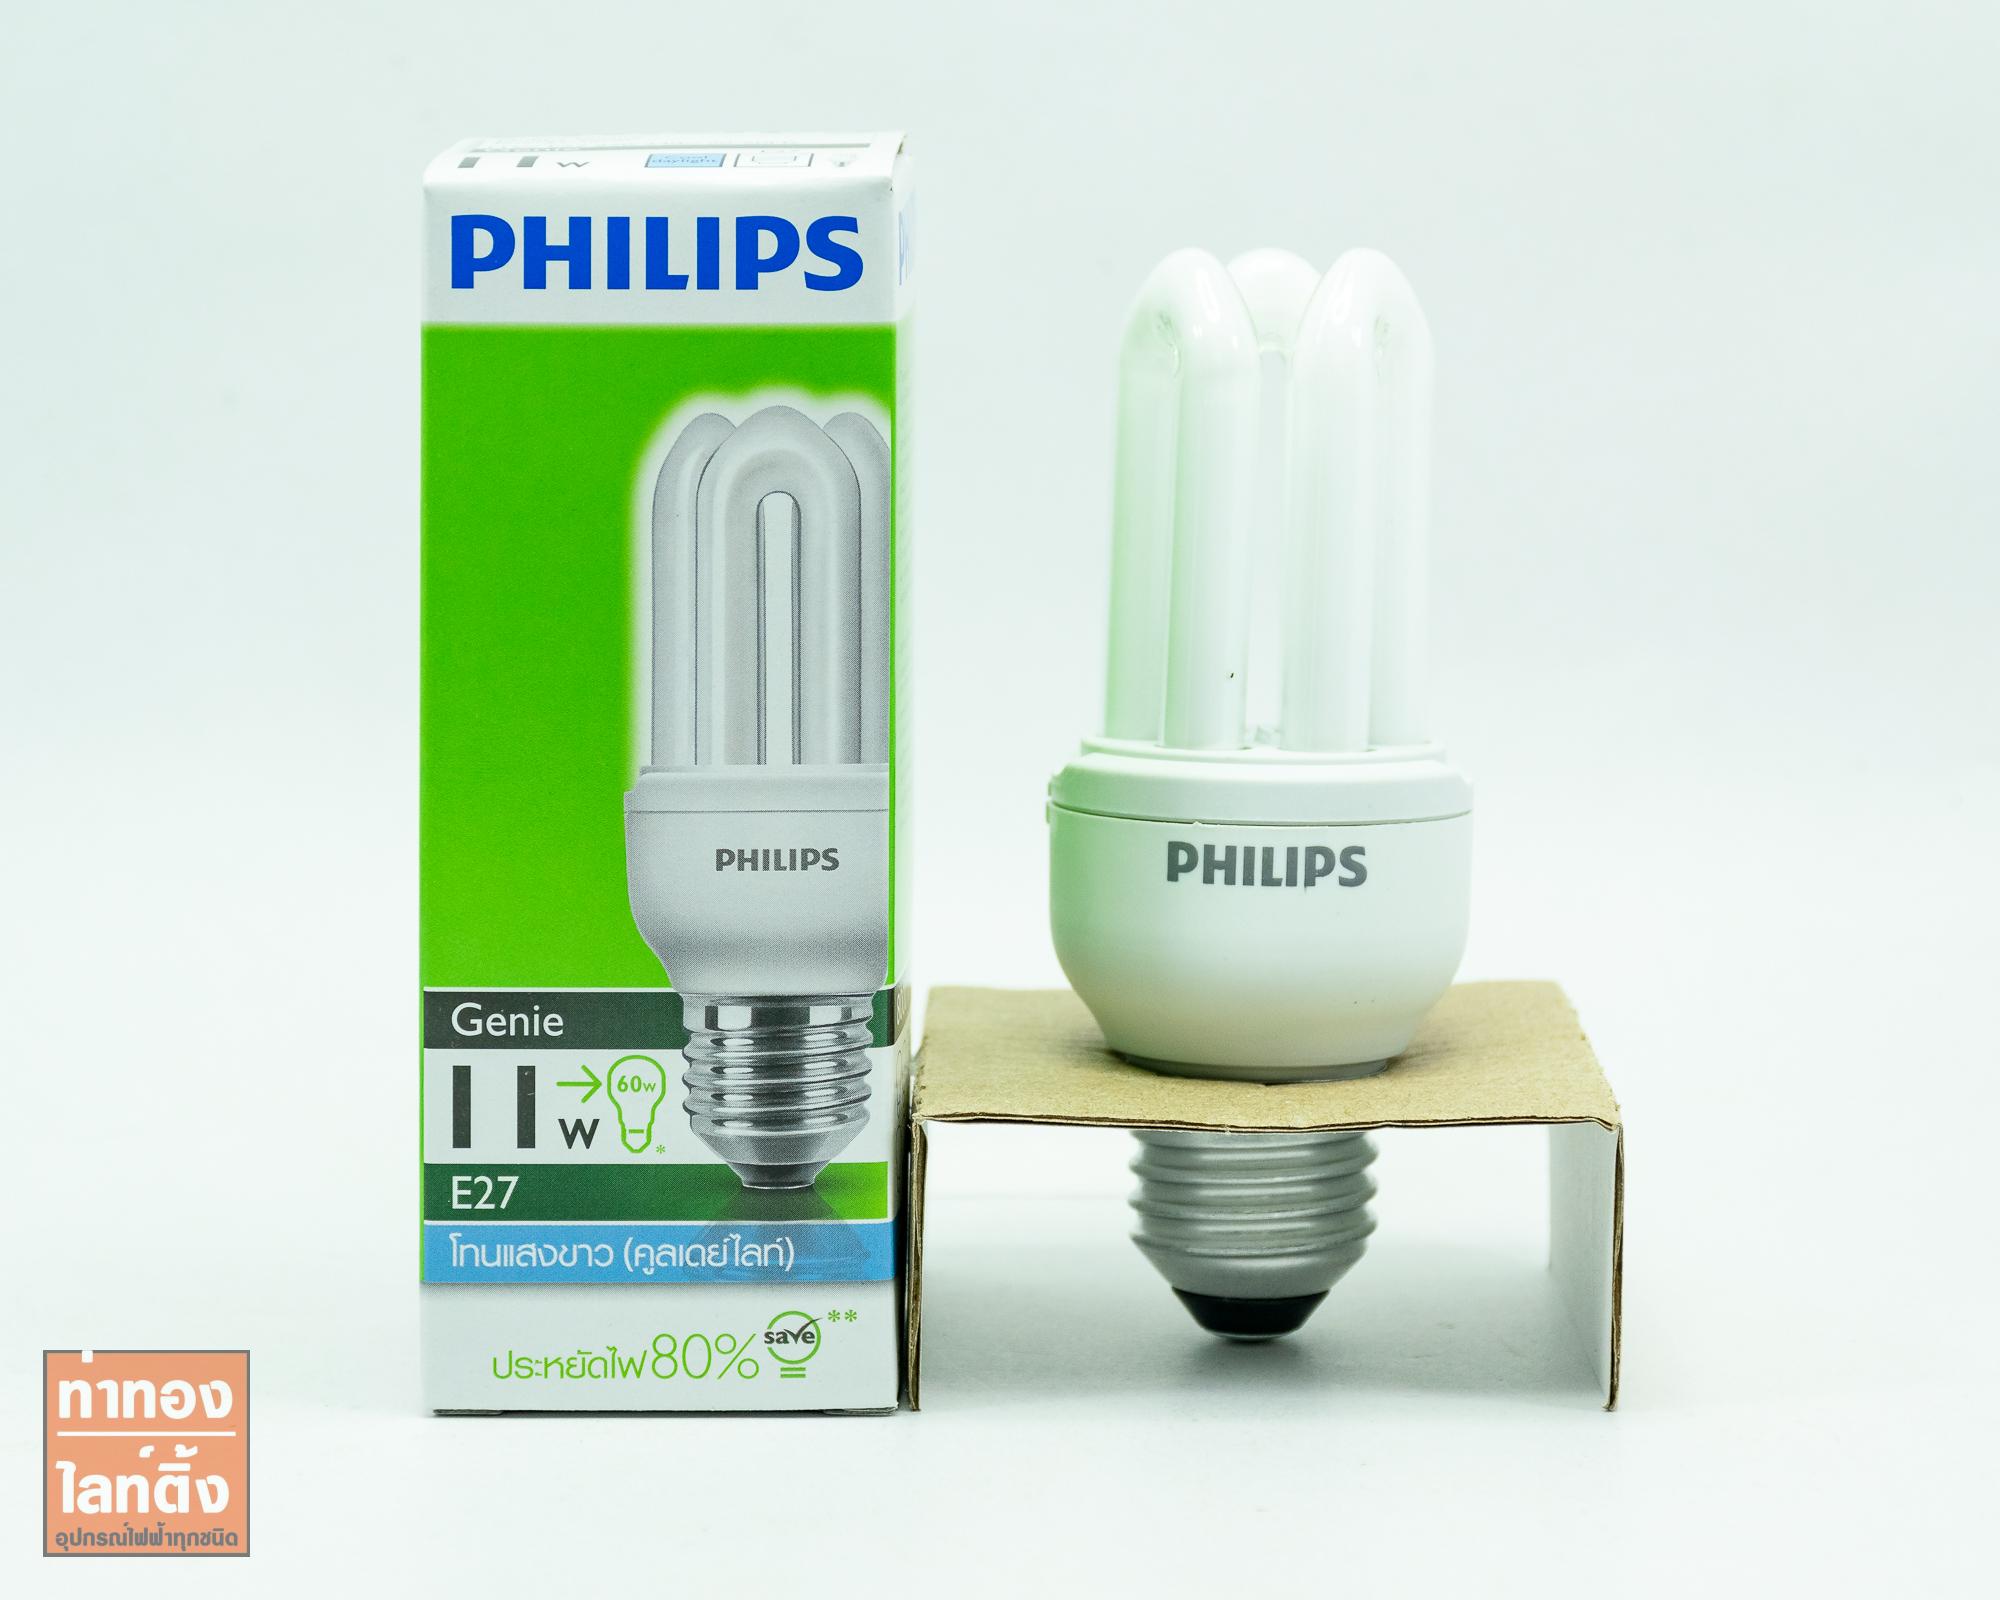 Philips Genie 11W หลอดจีนี่ 11 วัตต์ ขั้วเกลียว E27 แสงขาว Cool Day Light หลอดประหยัดไฟ ทรงตะเกียบ จิ๋ว สุดคุ้ม